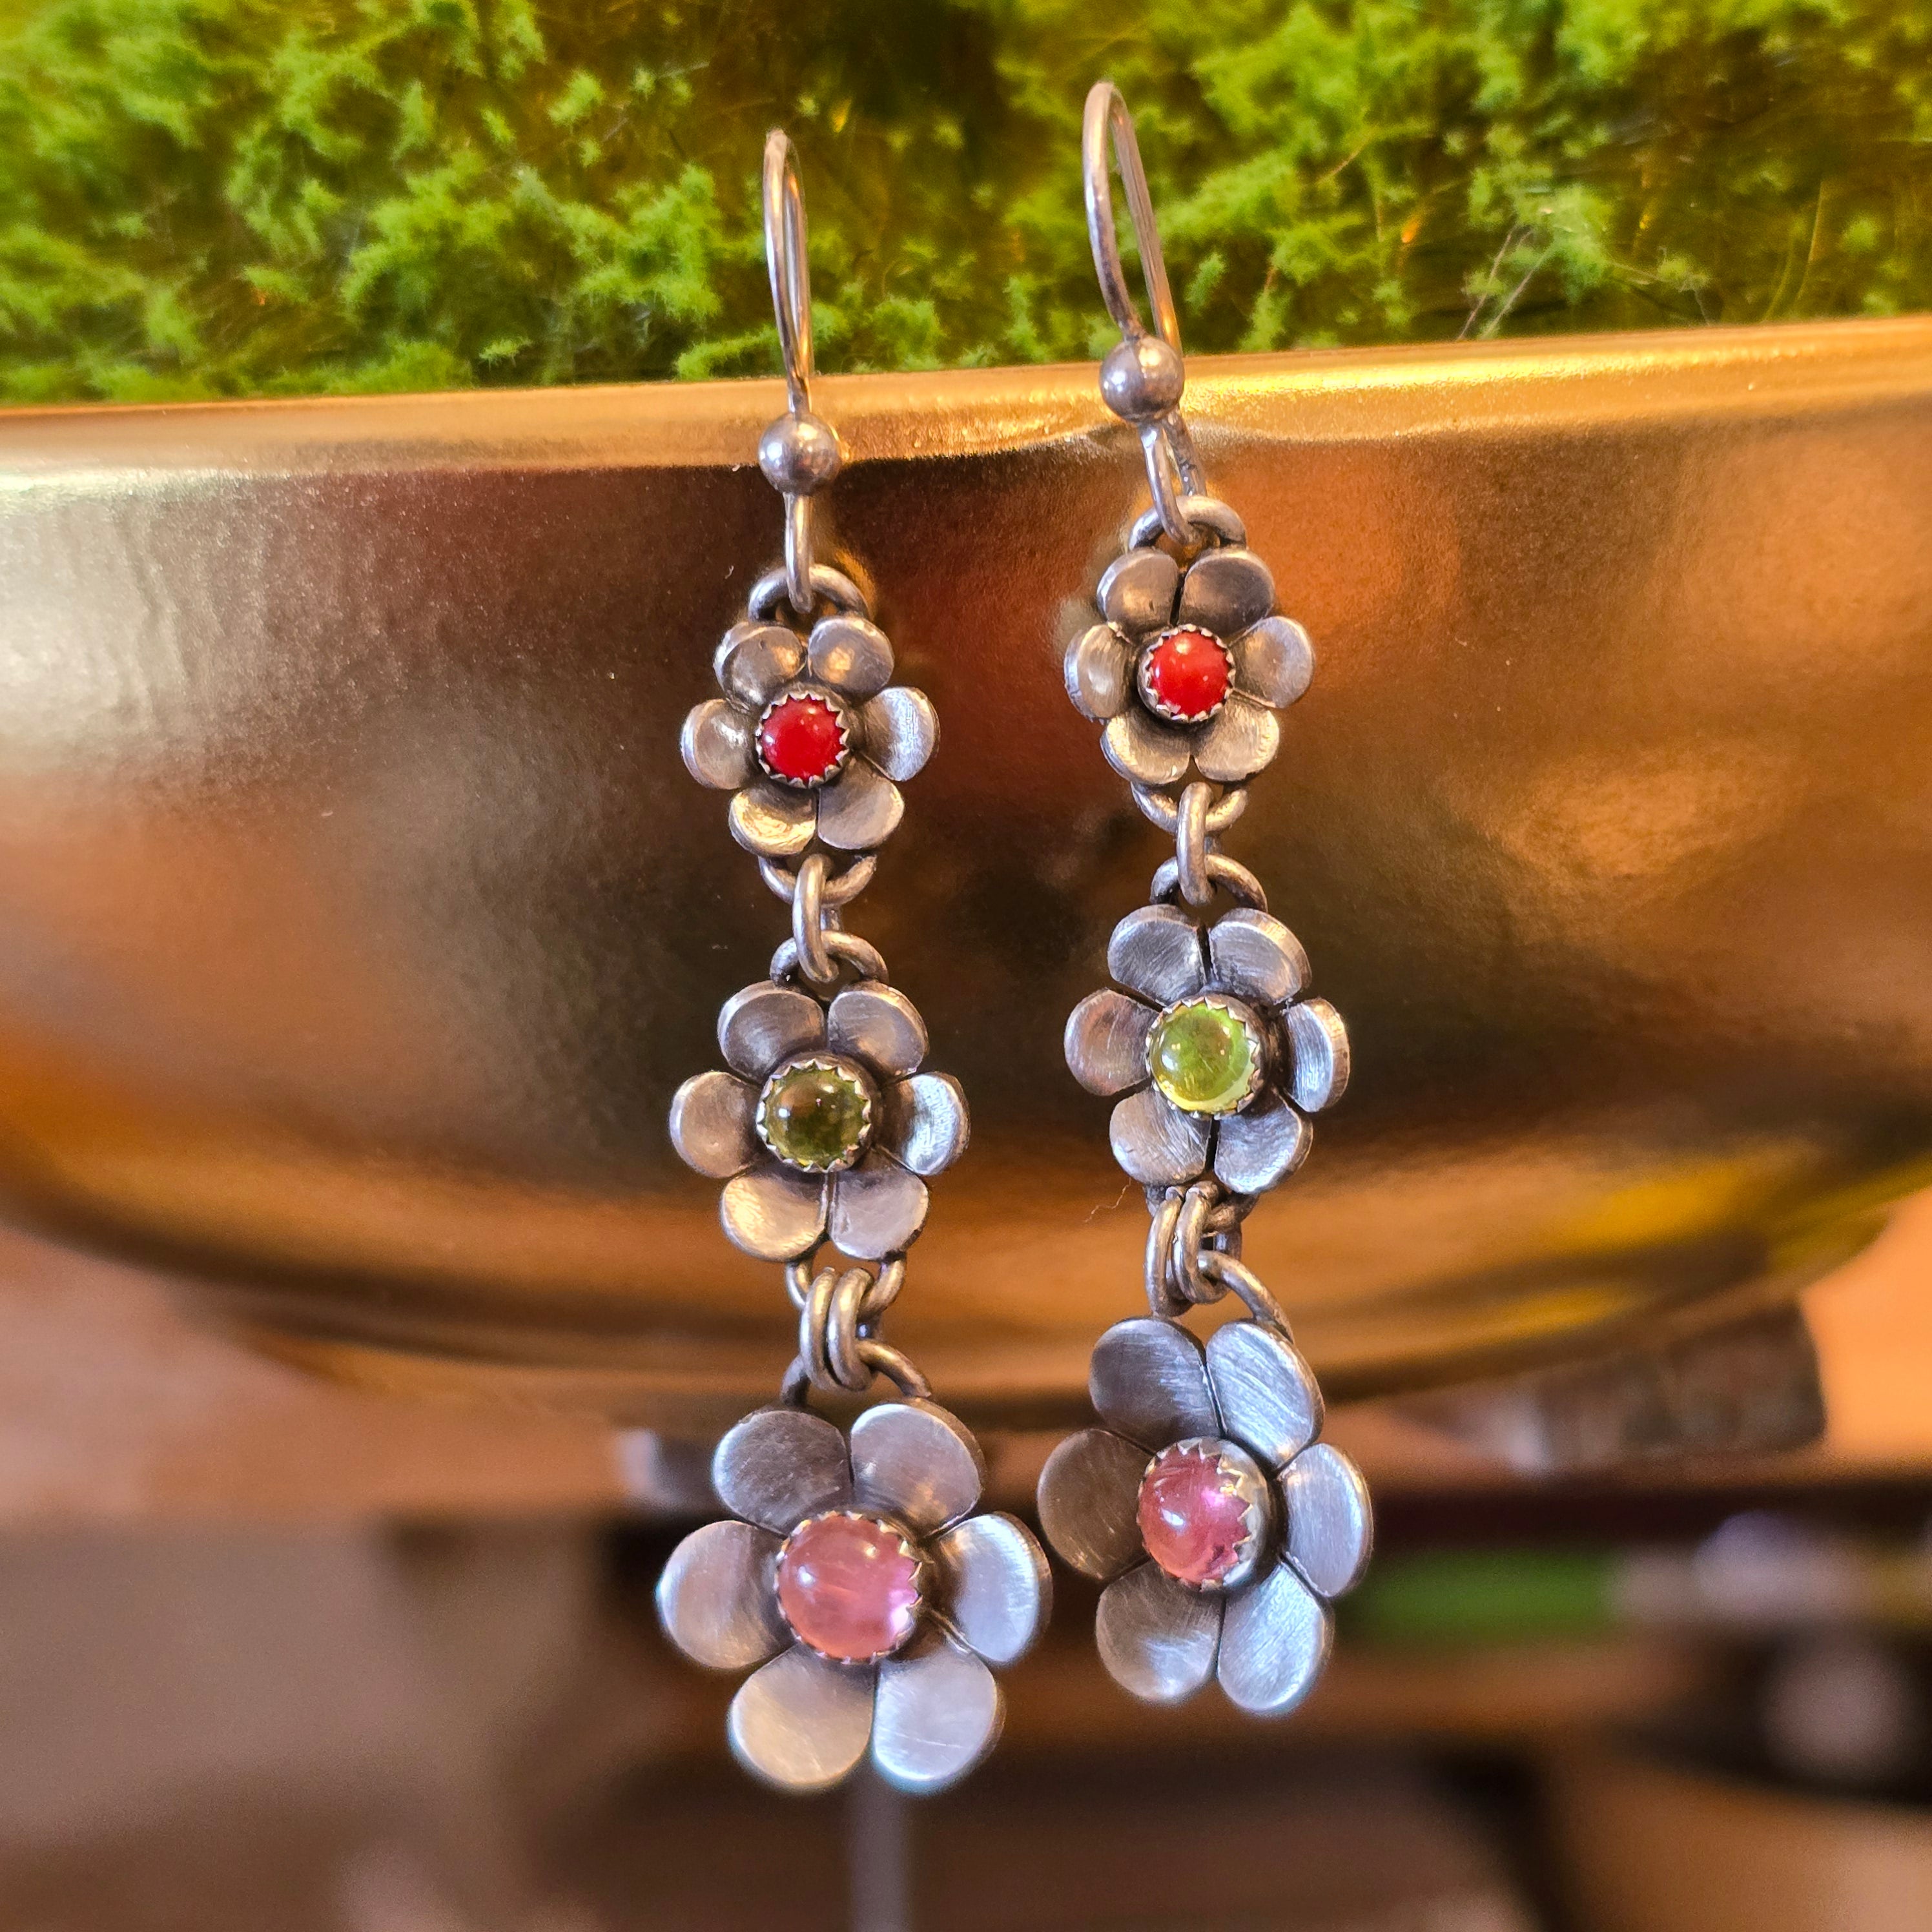 Triple Flower Dangle Earrings with Colorful Gemstones